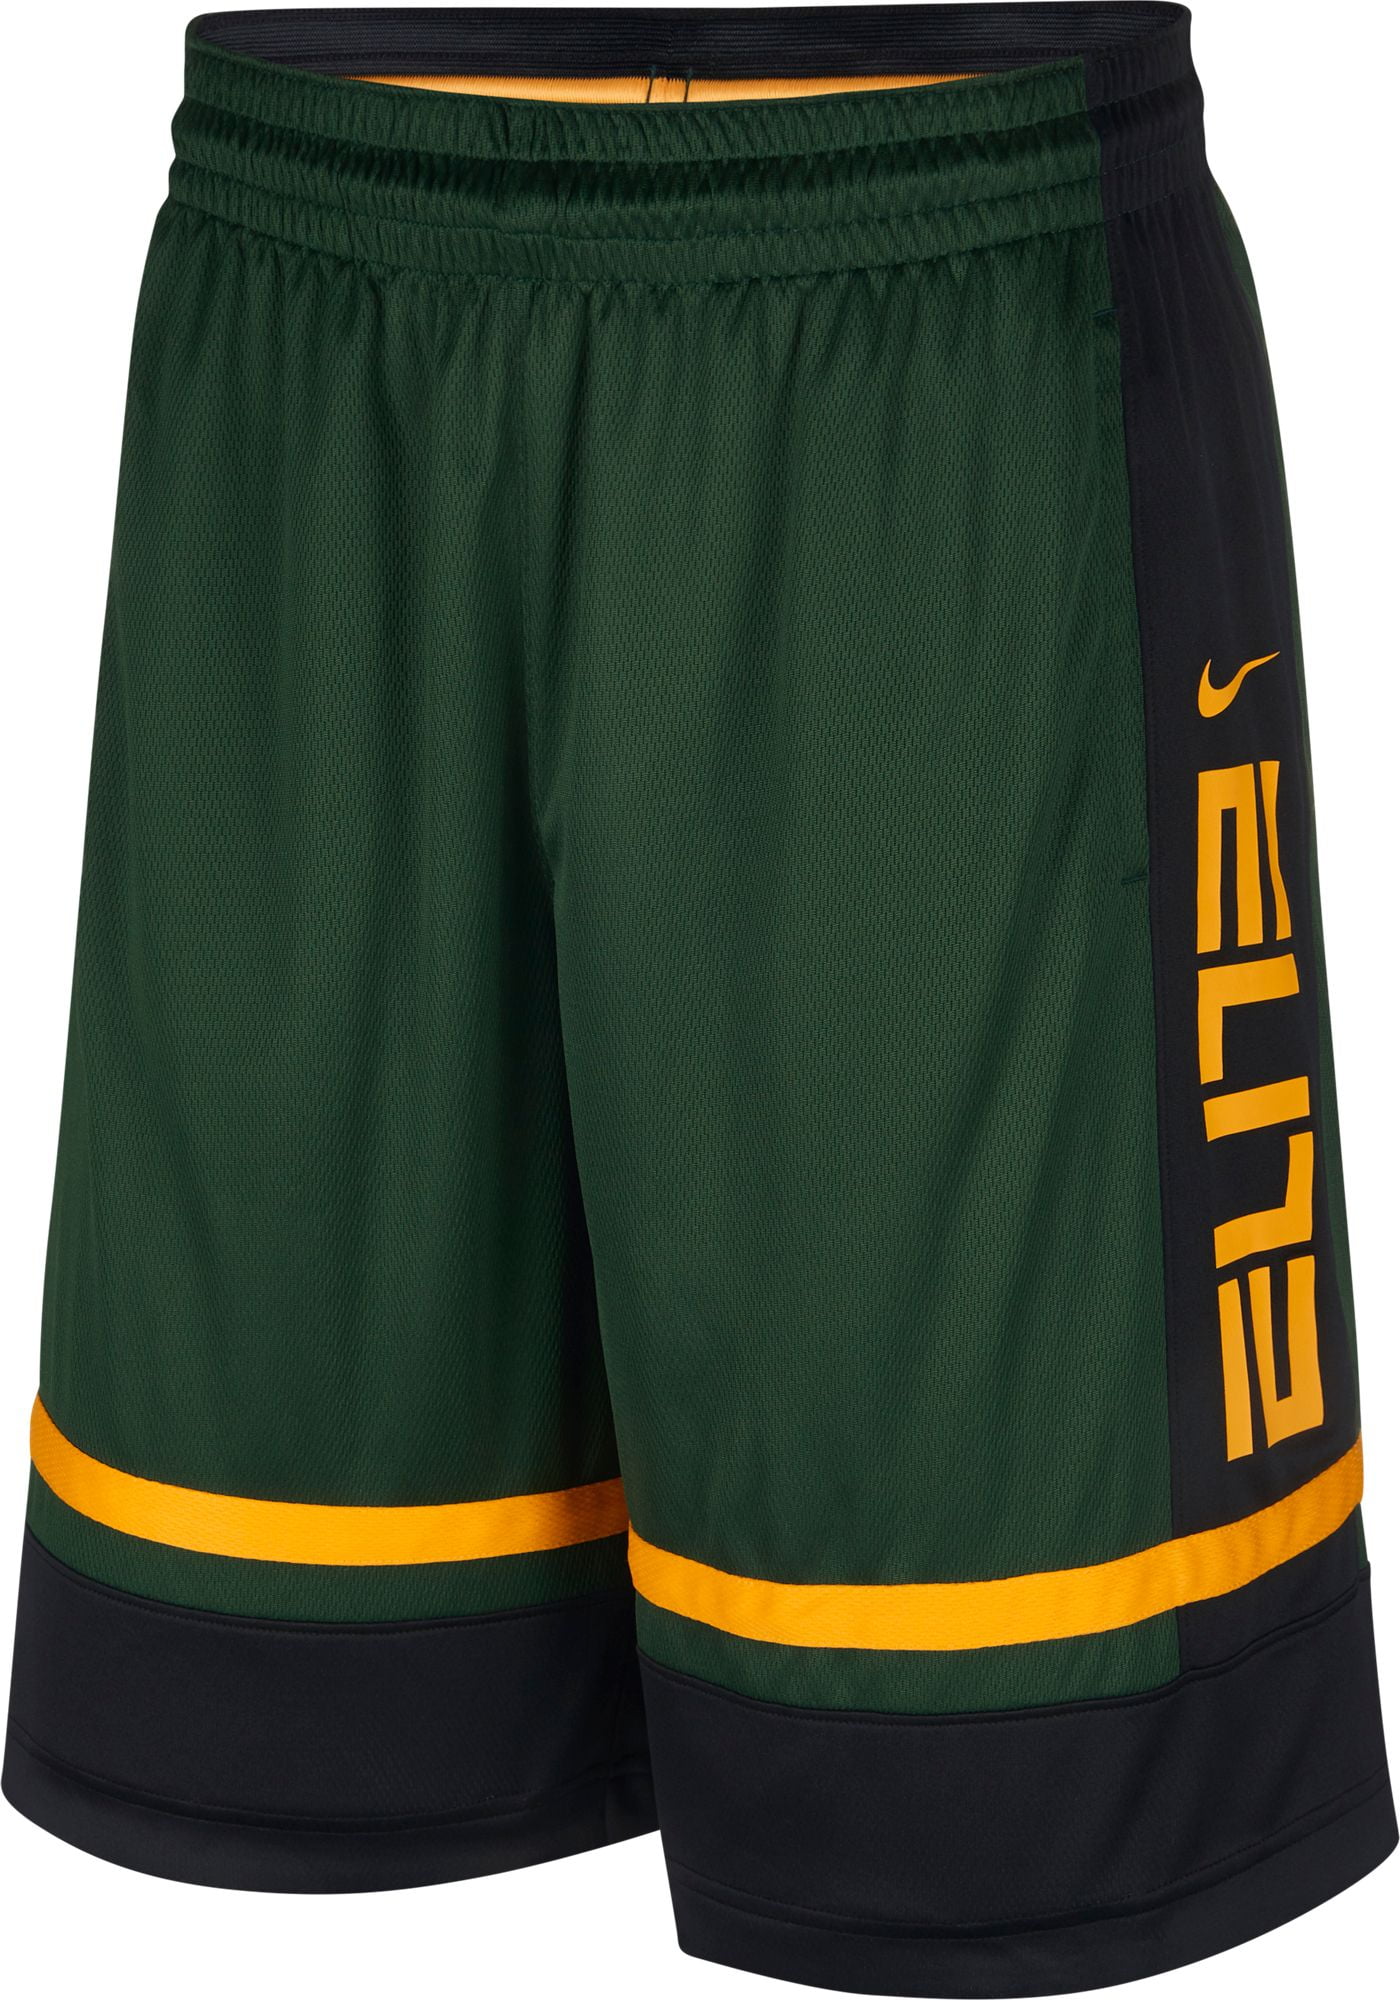 nike men's dry fit elite basketball shorts